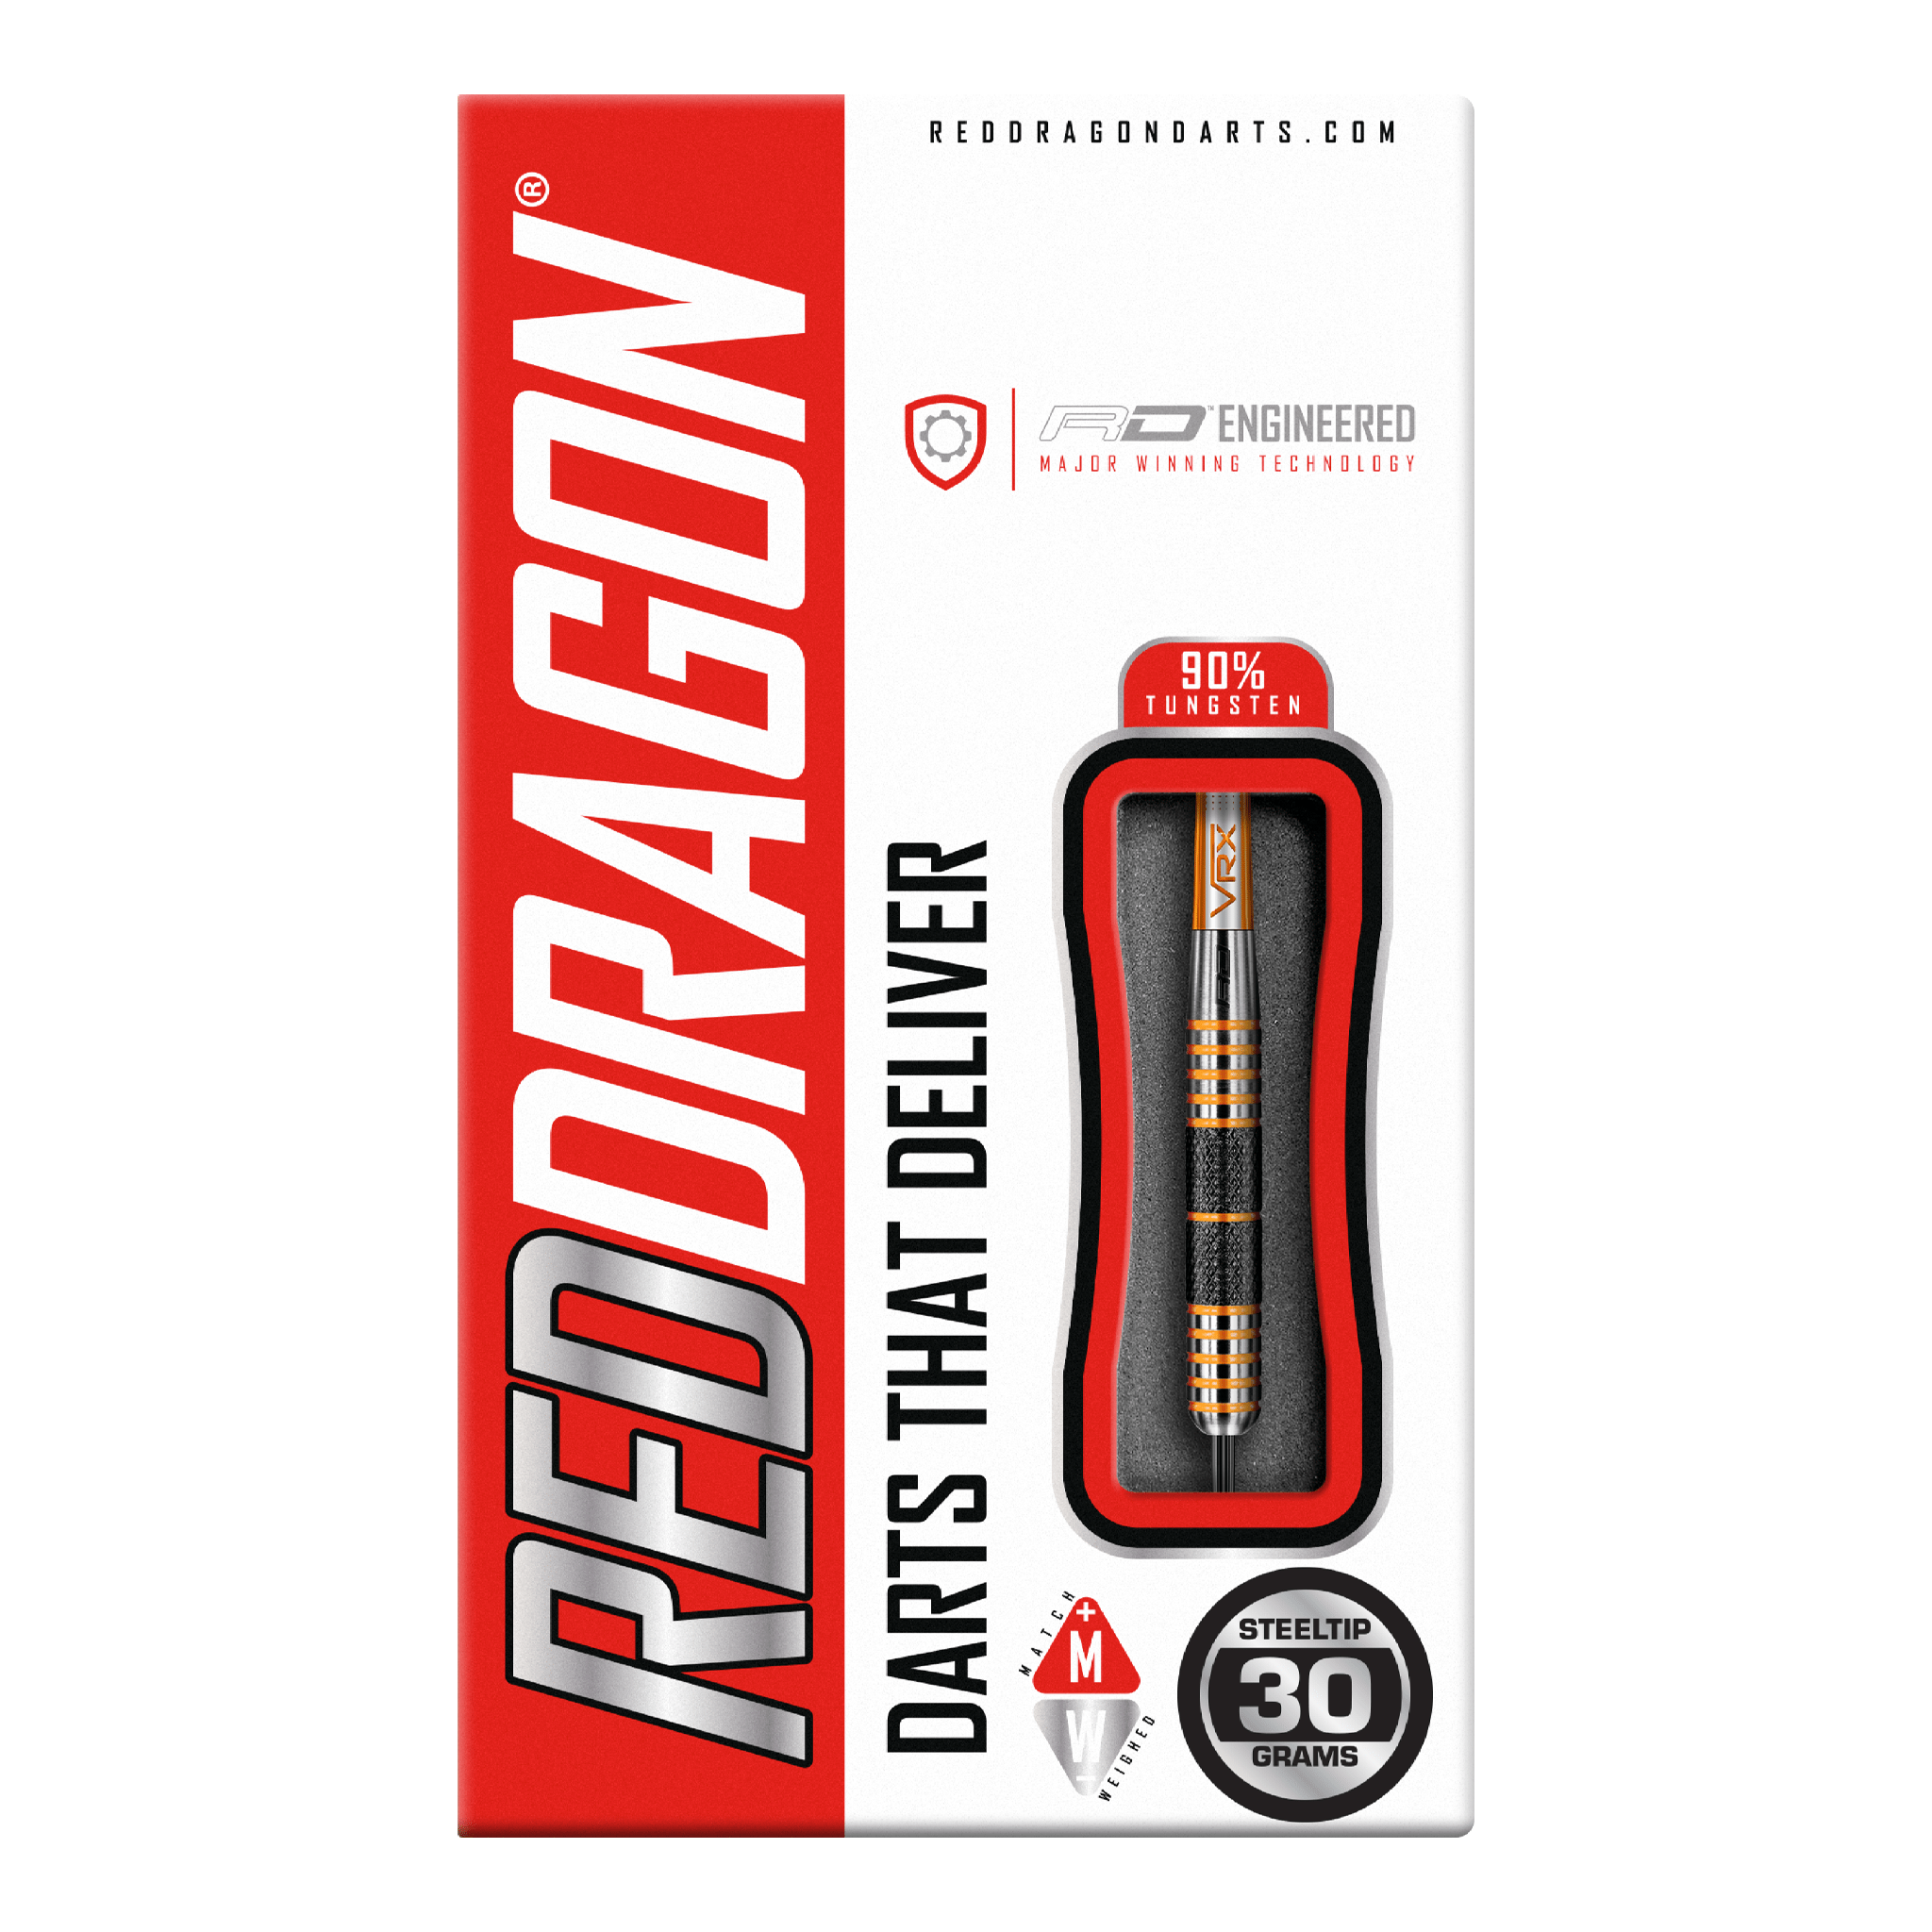 Red Dragon Amberjack 11 - 90% Tungsten Steel Tip Darts 30 Grams Darts